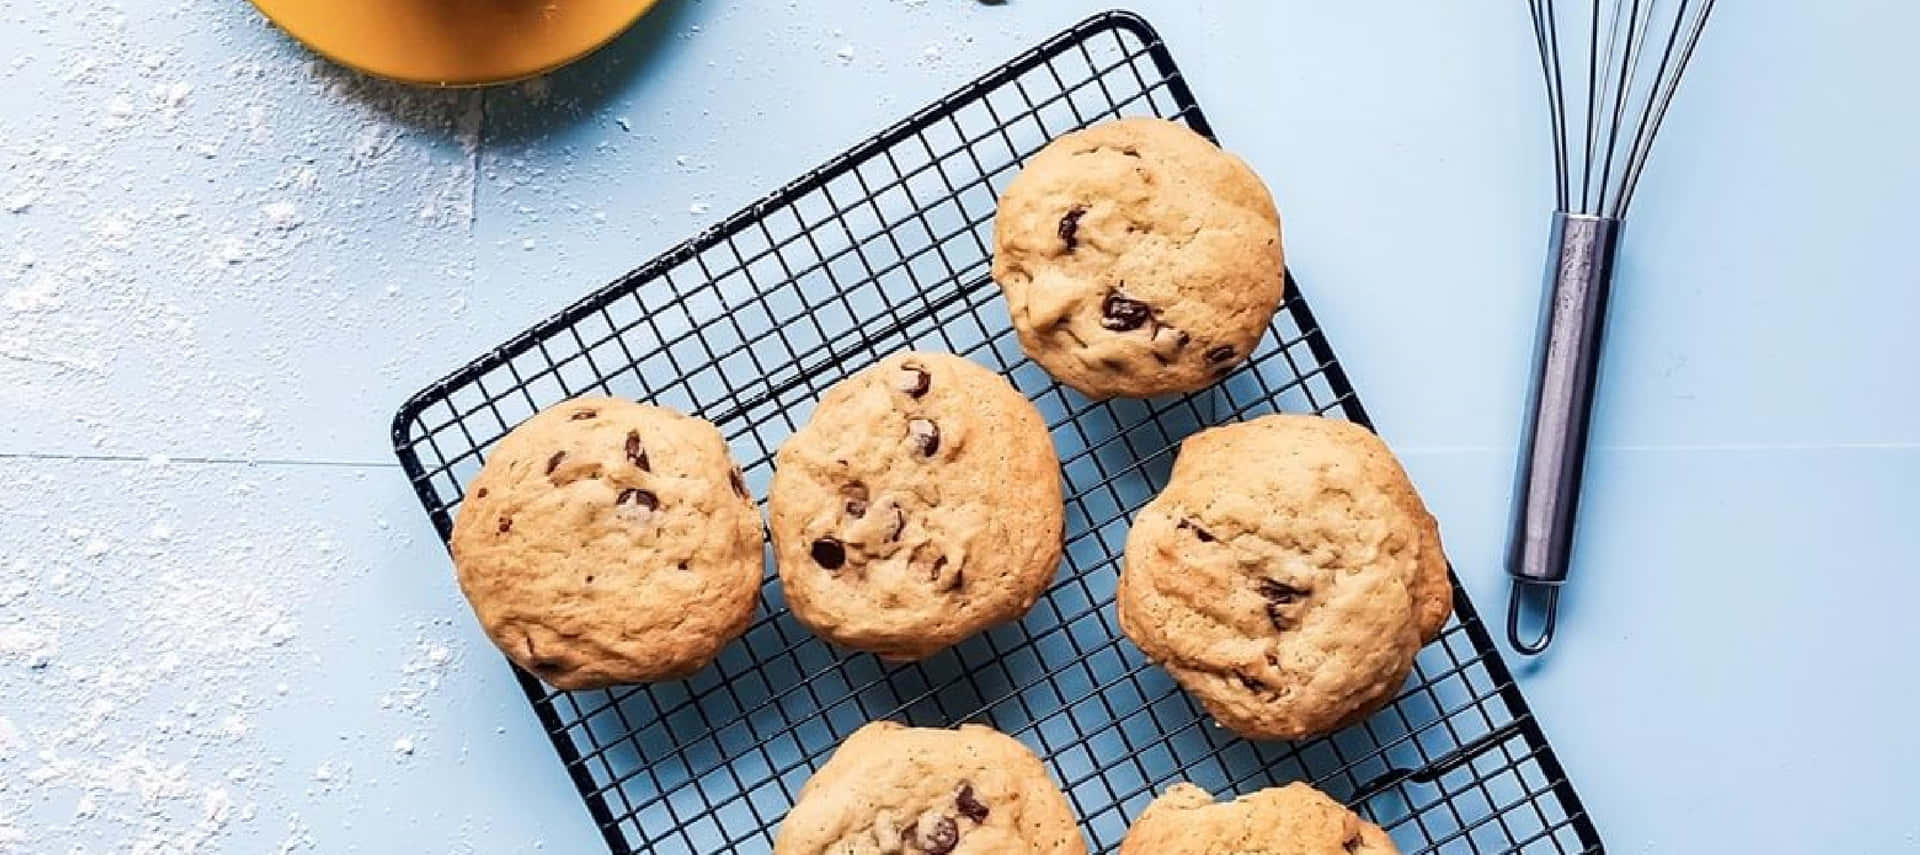 Enjoy Yummy, Delicious 1440p Cookies